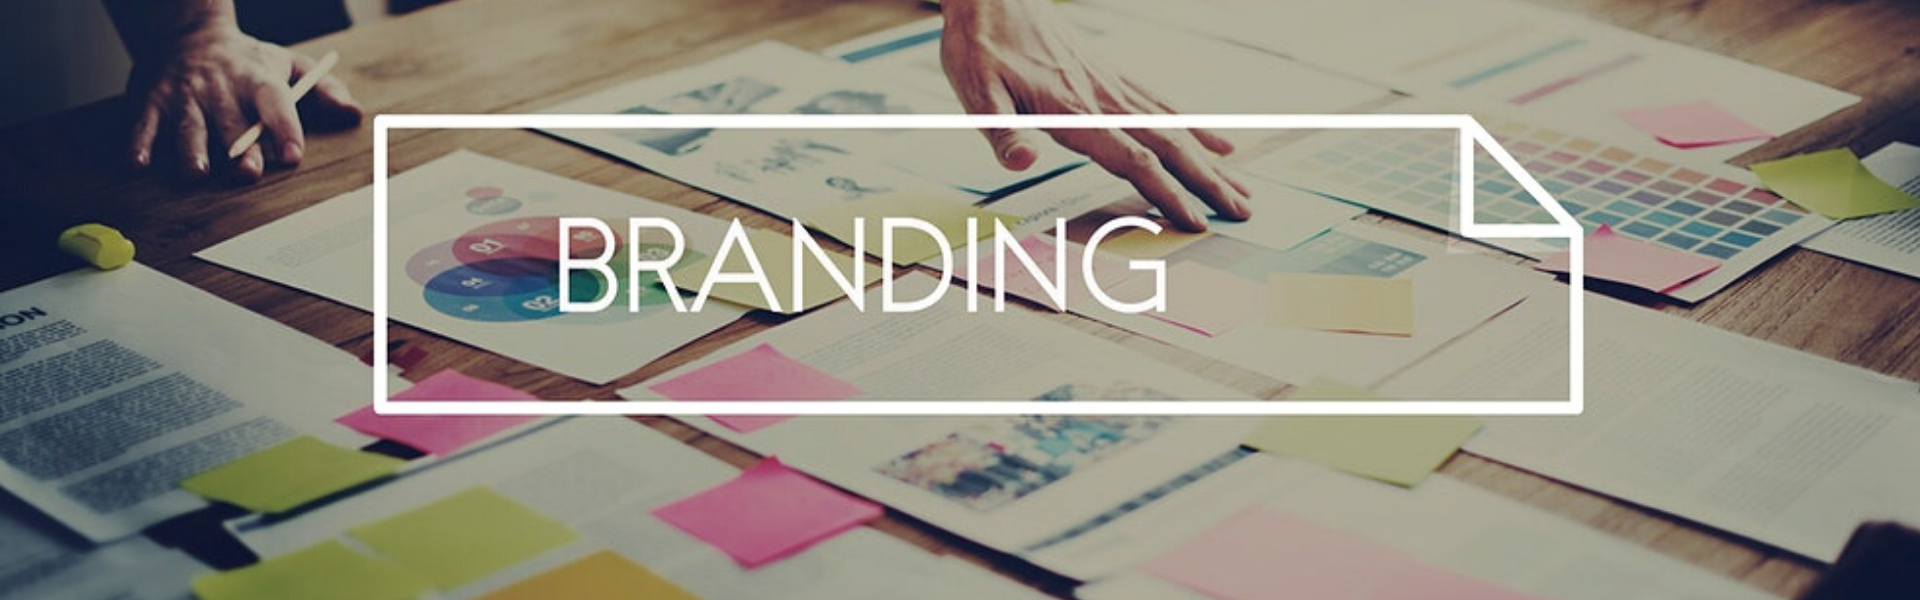 Planning Startegy for Company Branding